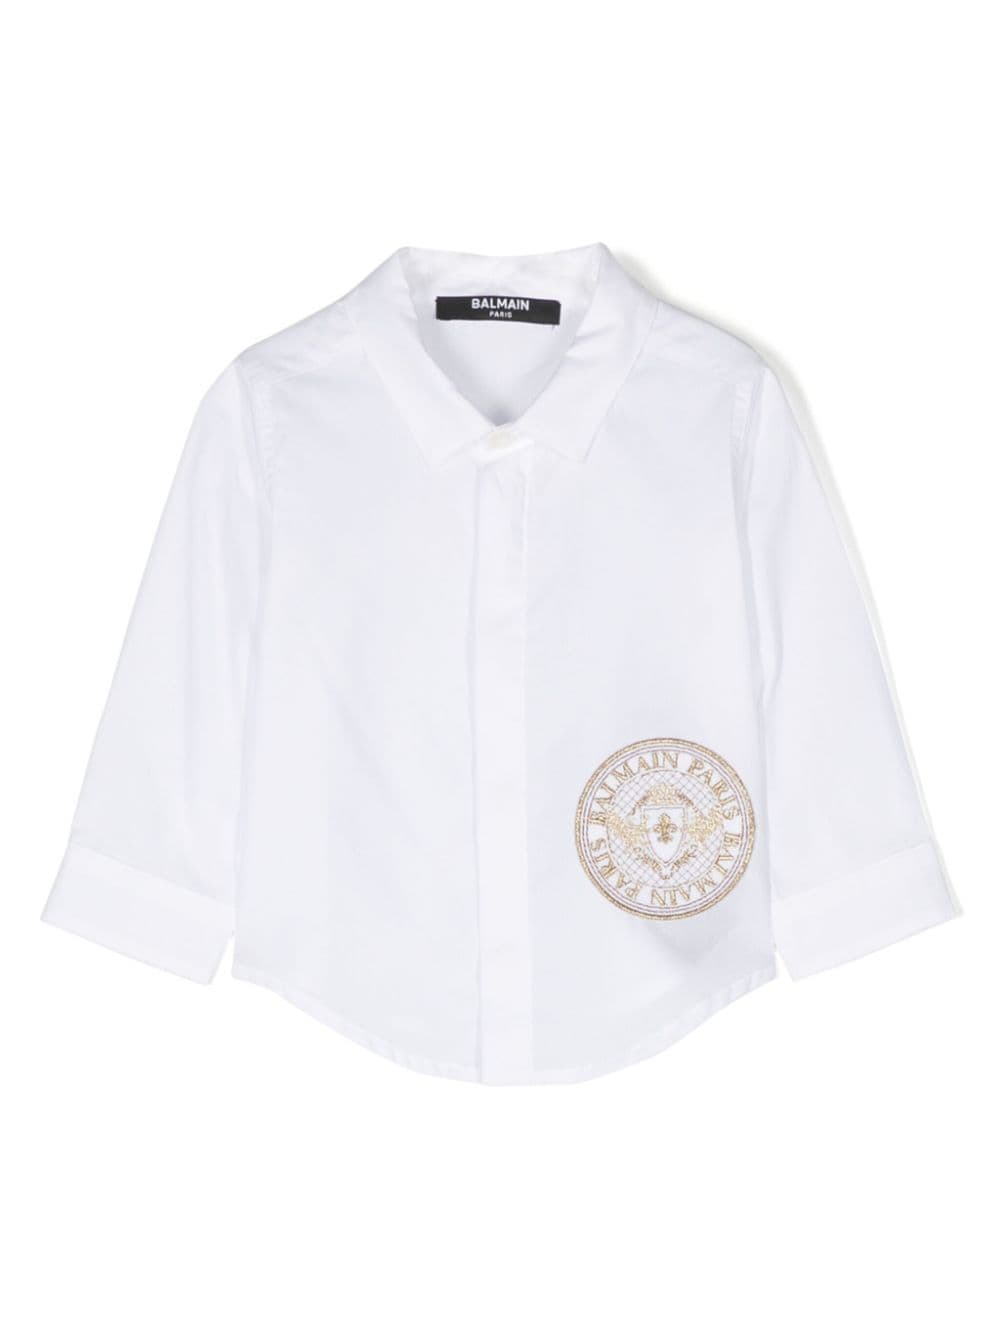 Chemise enfant blanche avec logo